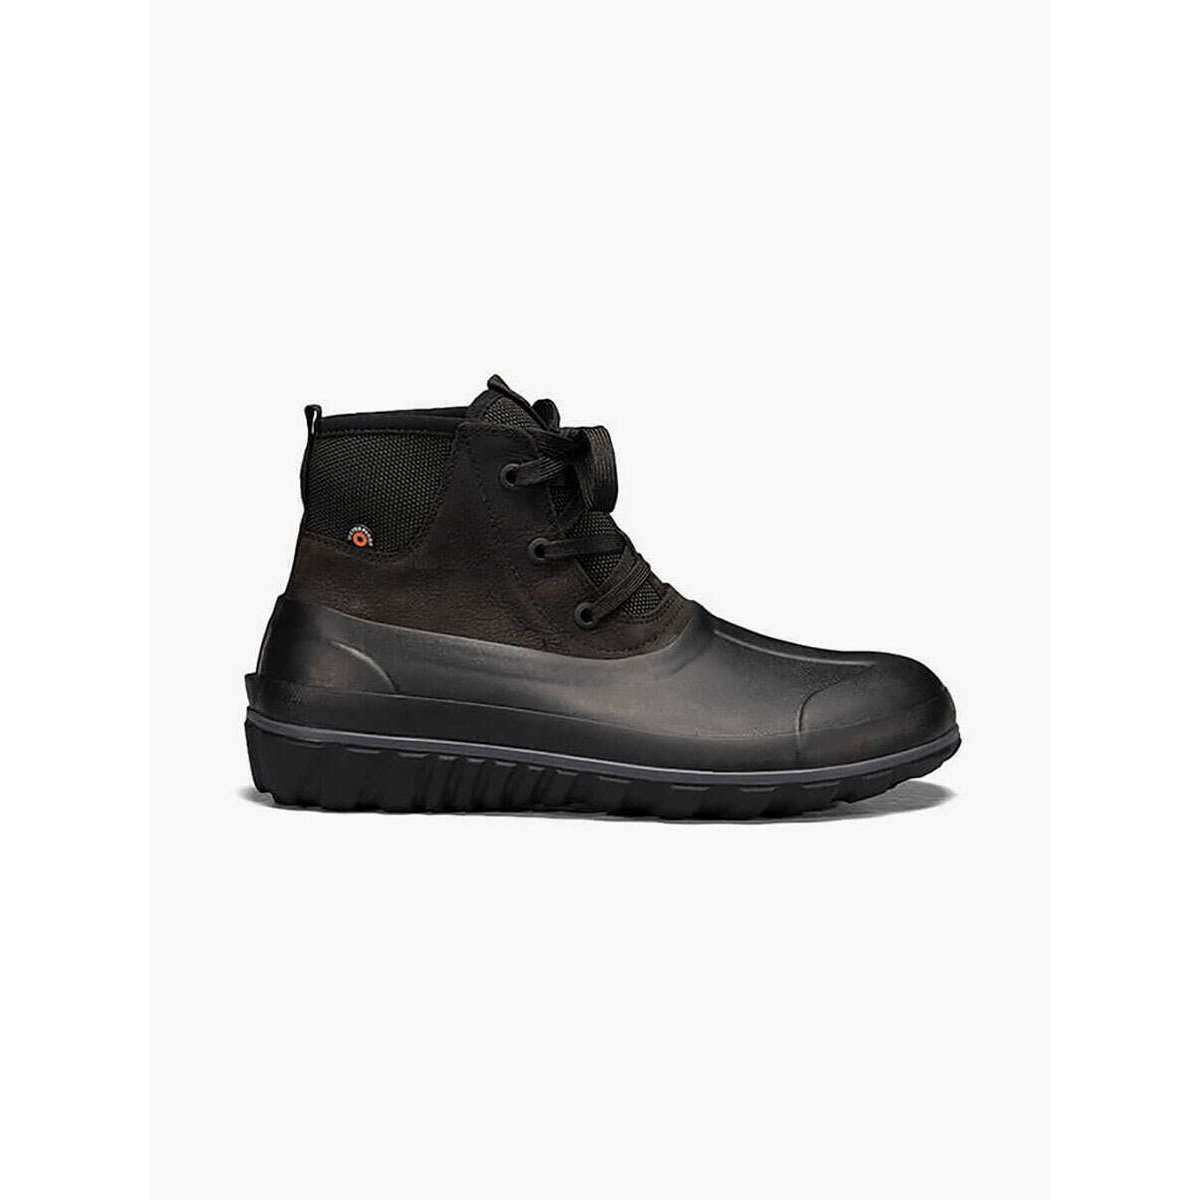 BOGS Men's Casual Lace Waterproof Leather Snow Boots Black - 72620-001 001 Black - 001 Black, 9-M